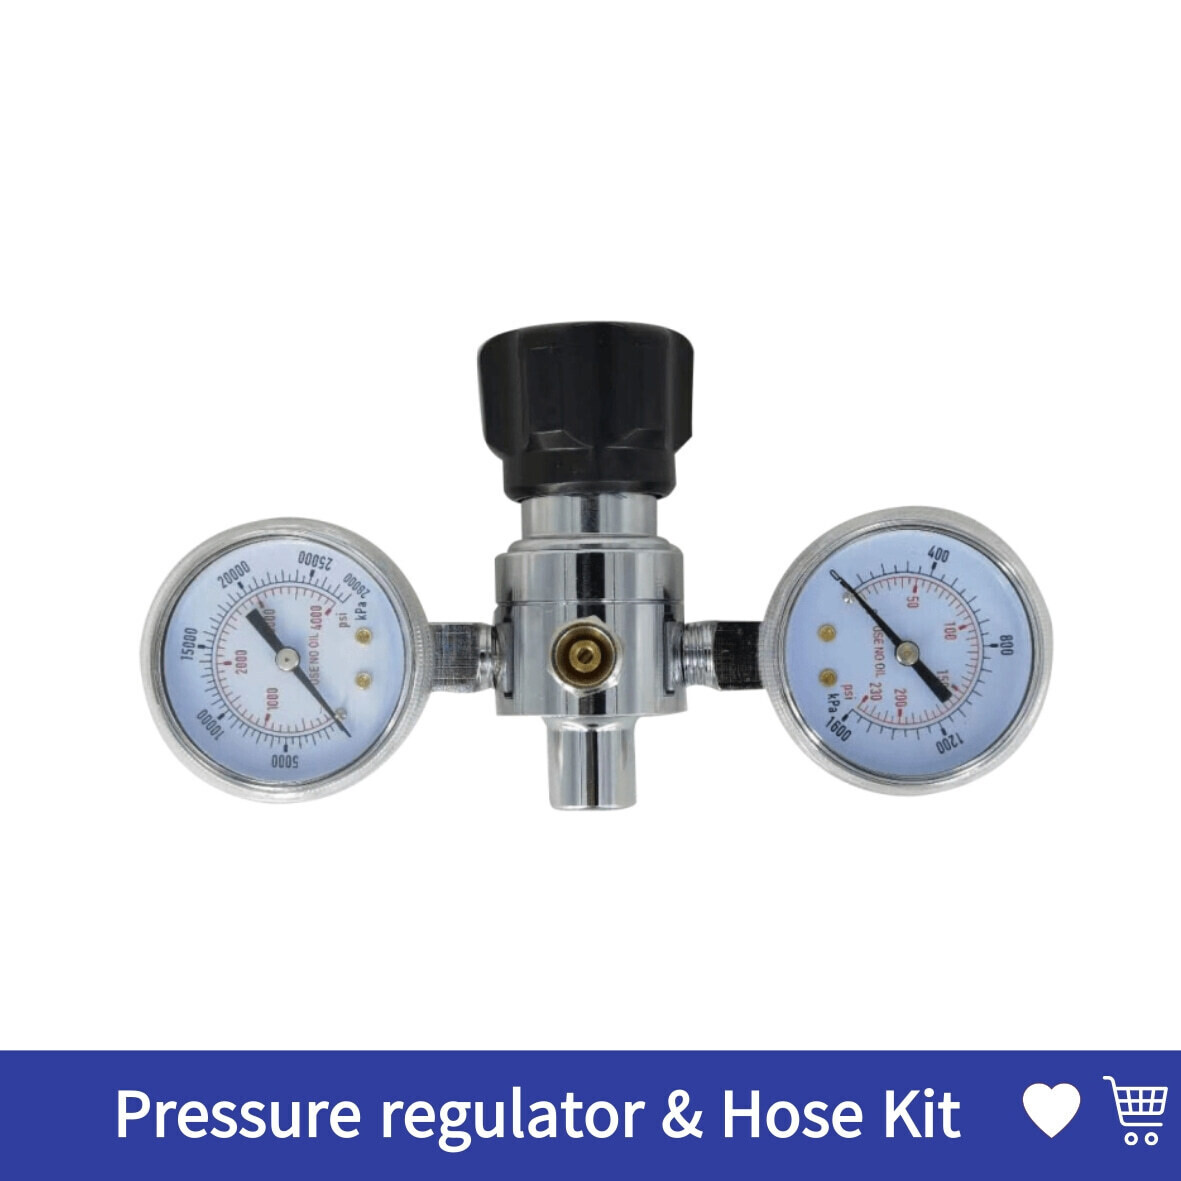 Pressure regulator & Hose Kit